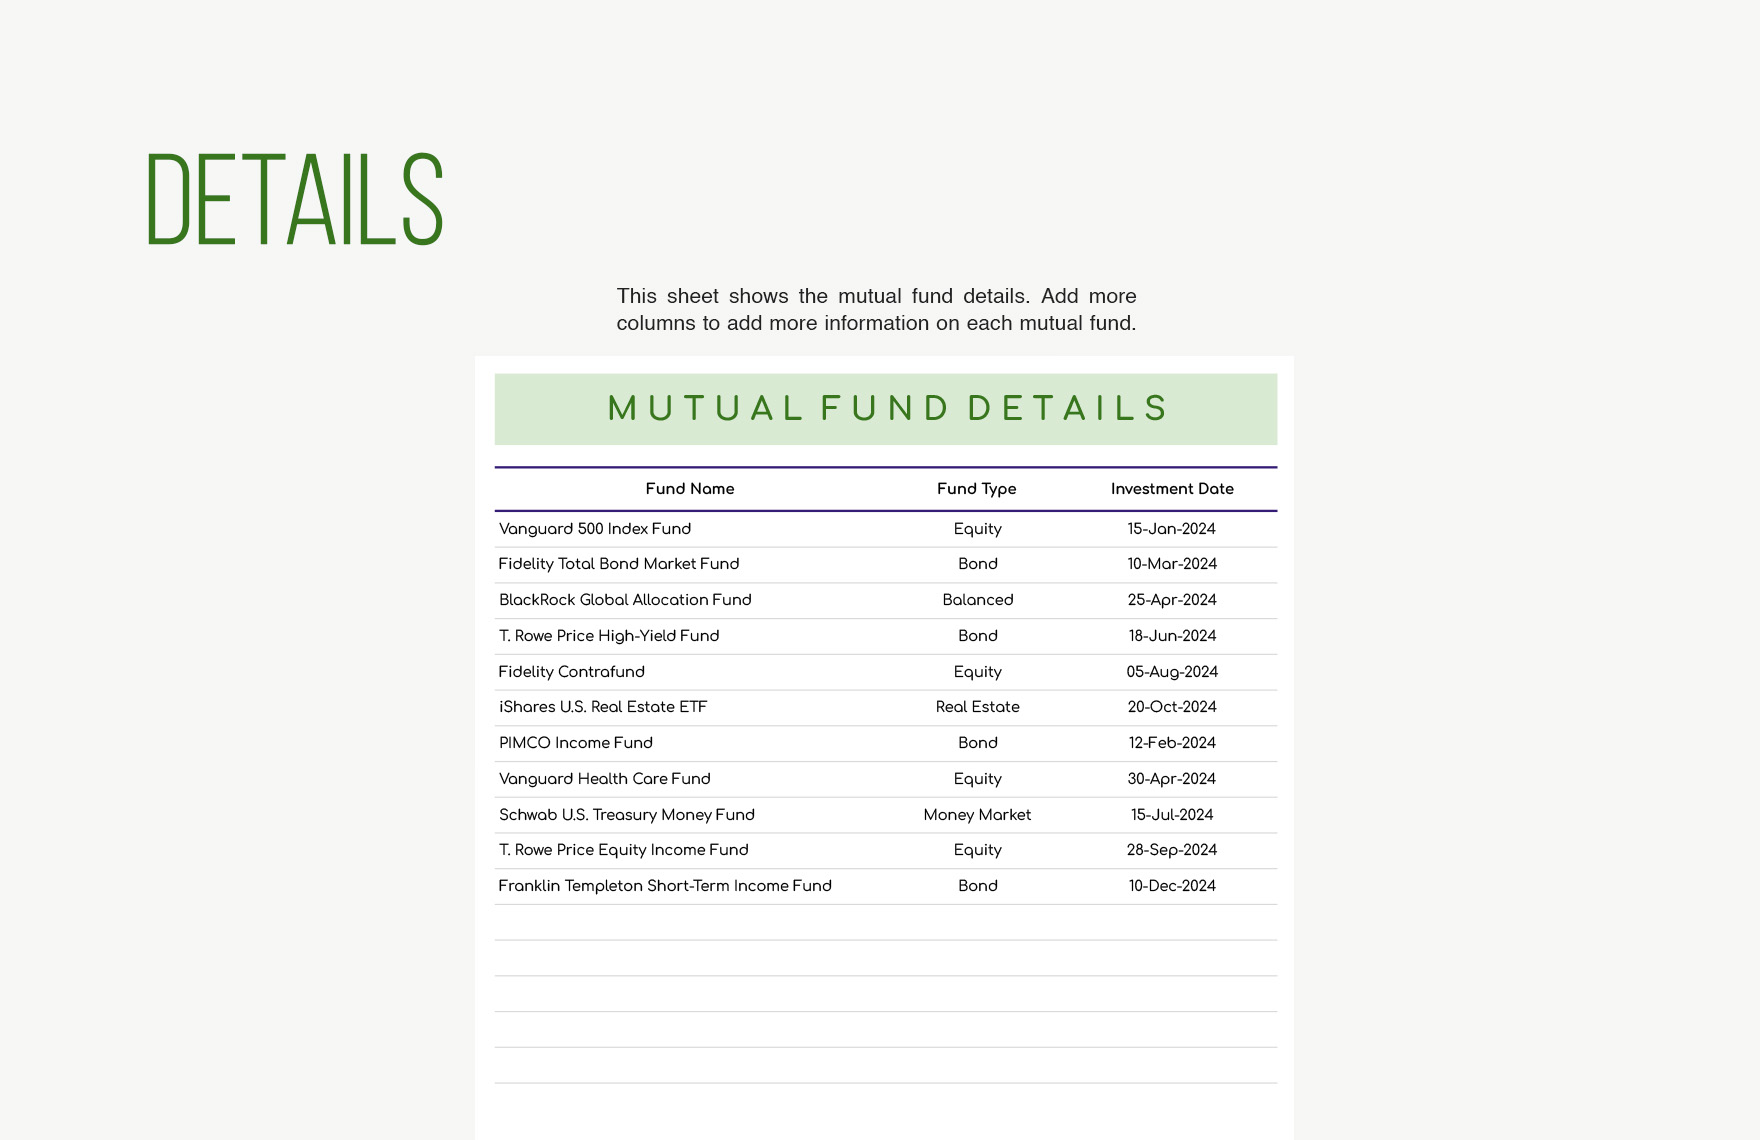 IT Mutual Fund Tracking Sheet Template